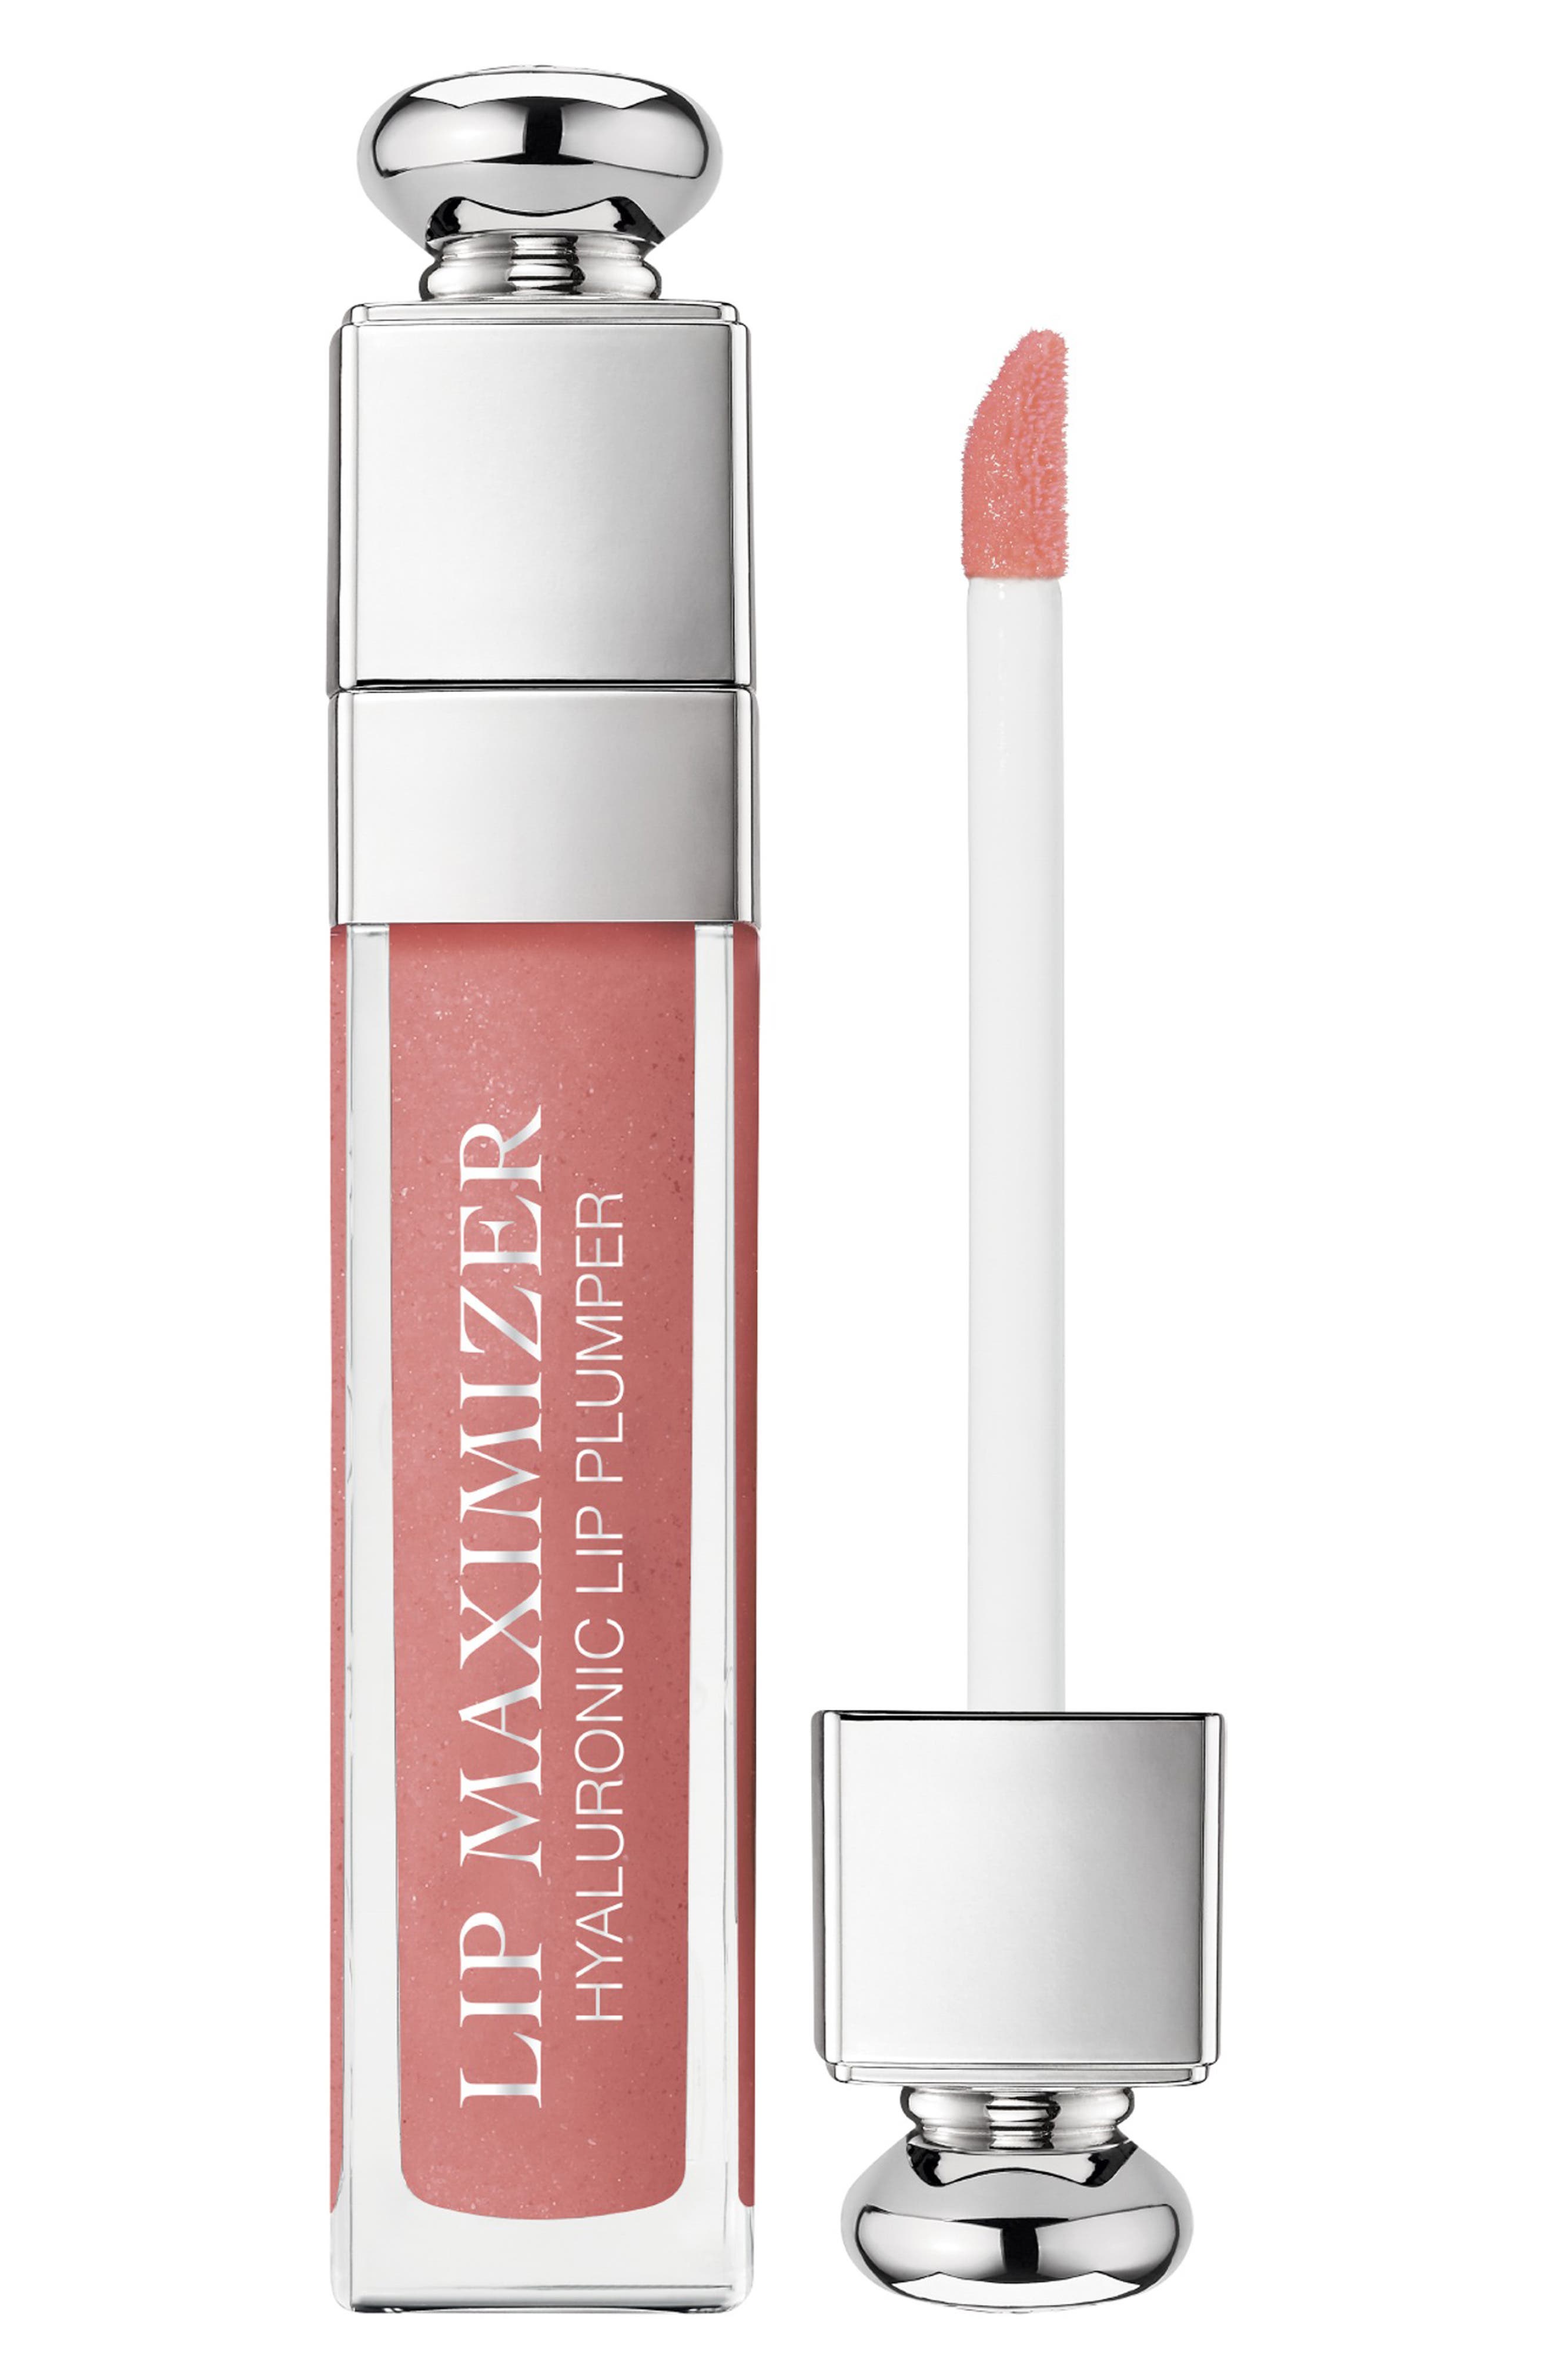 Dior Addict Lip Maximizer Plumping Lip Gloss in 012 Rosewood/Glow